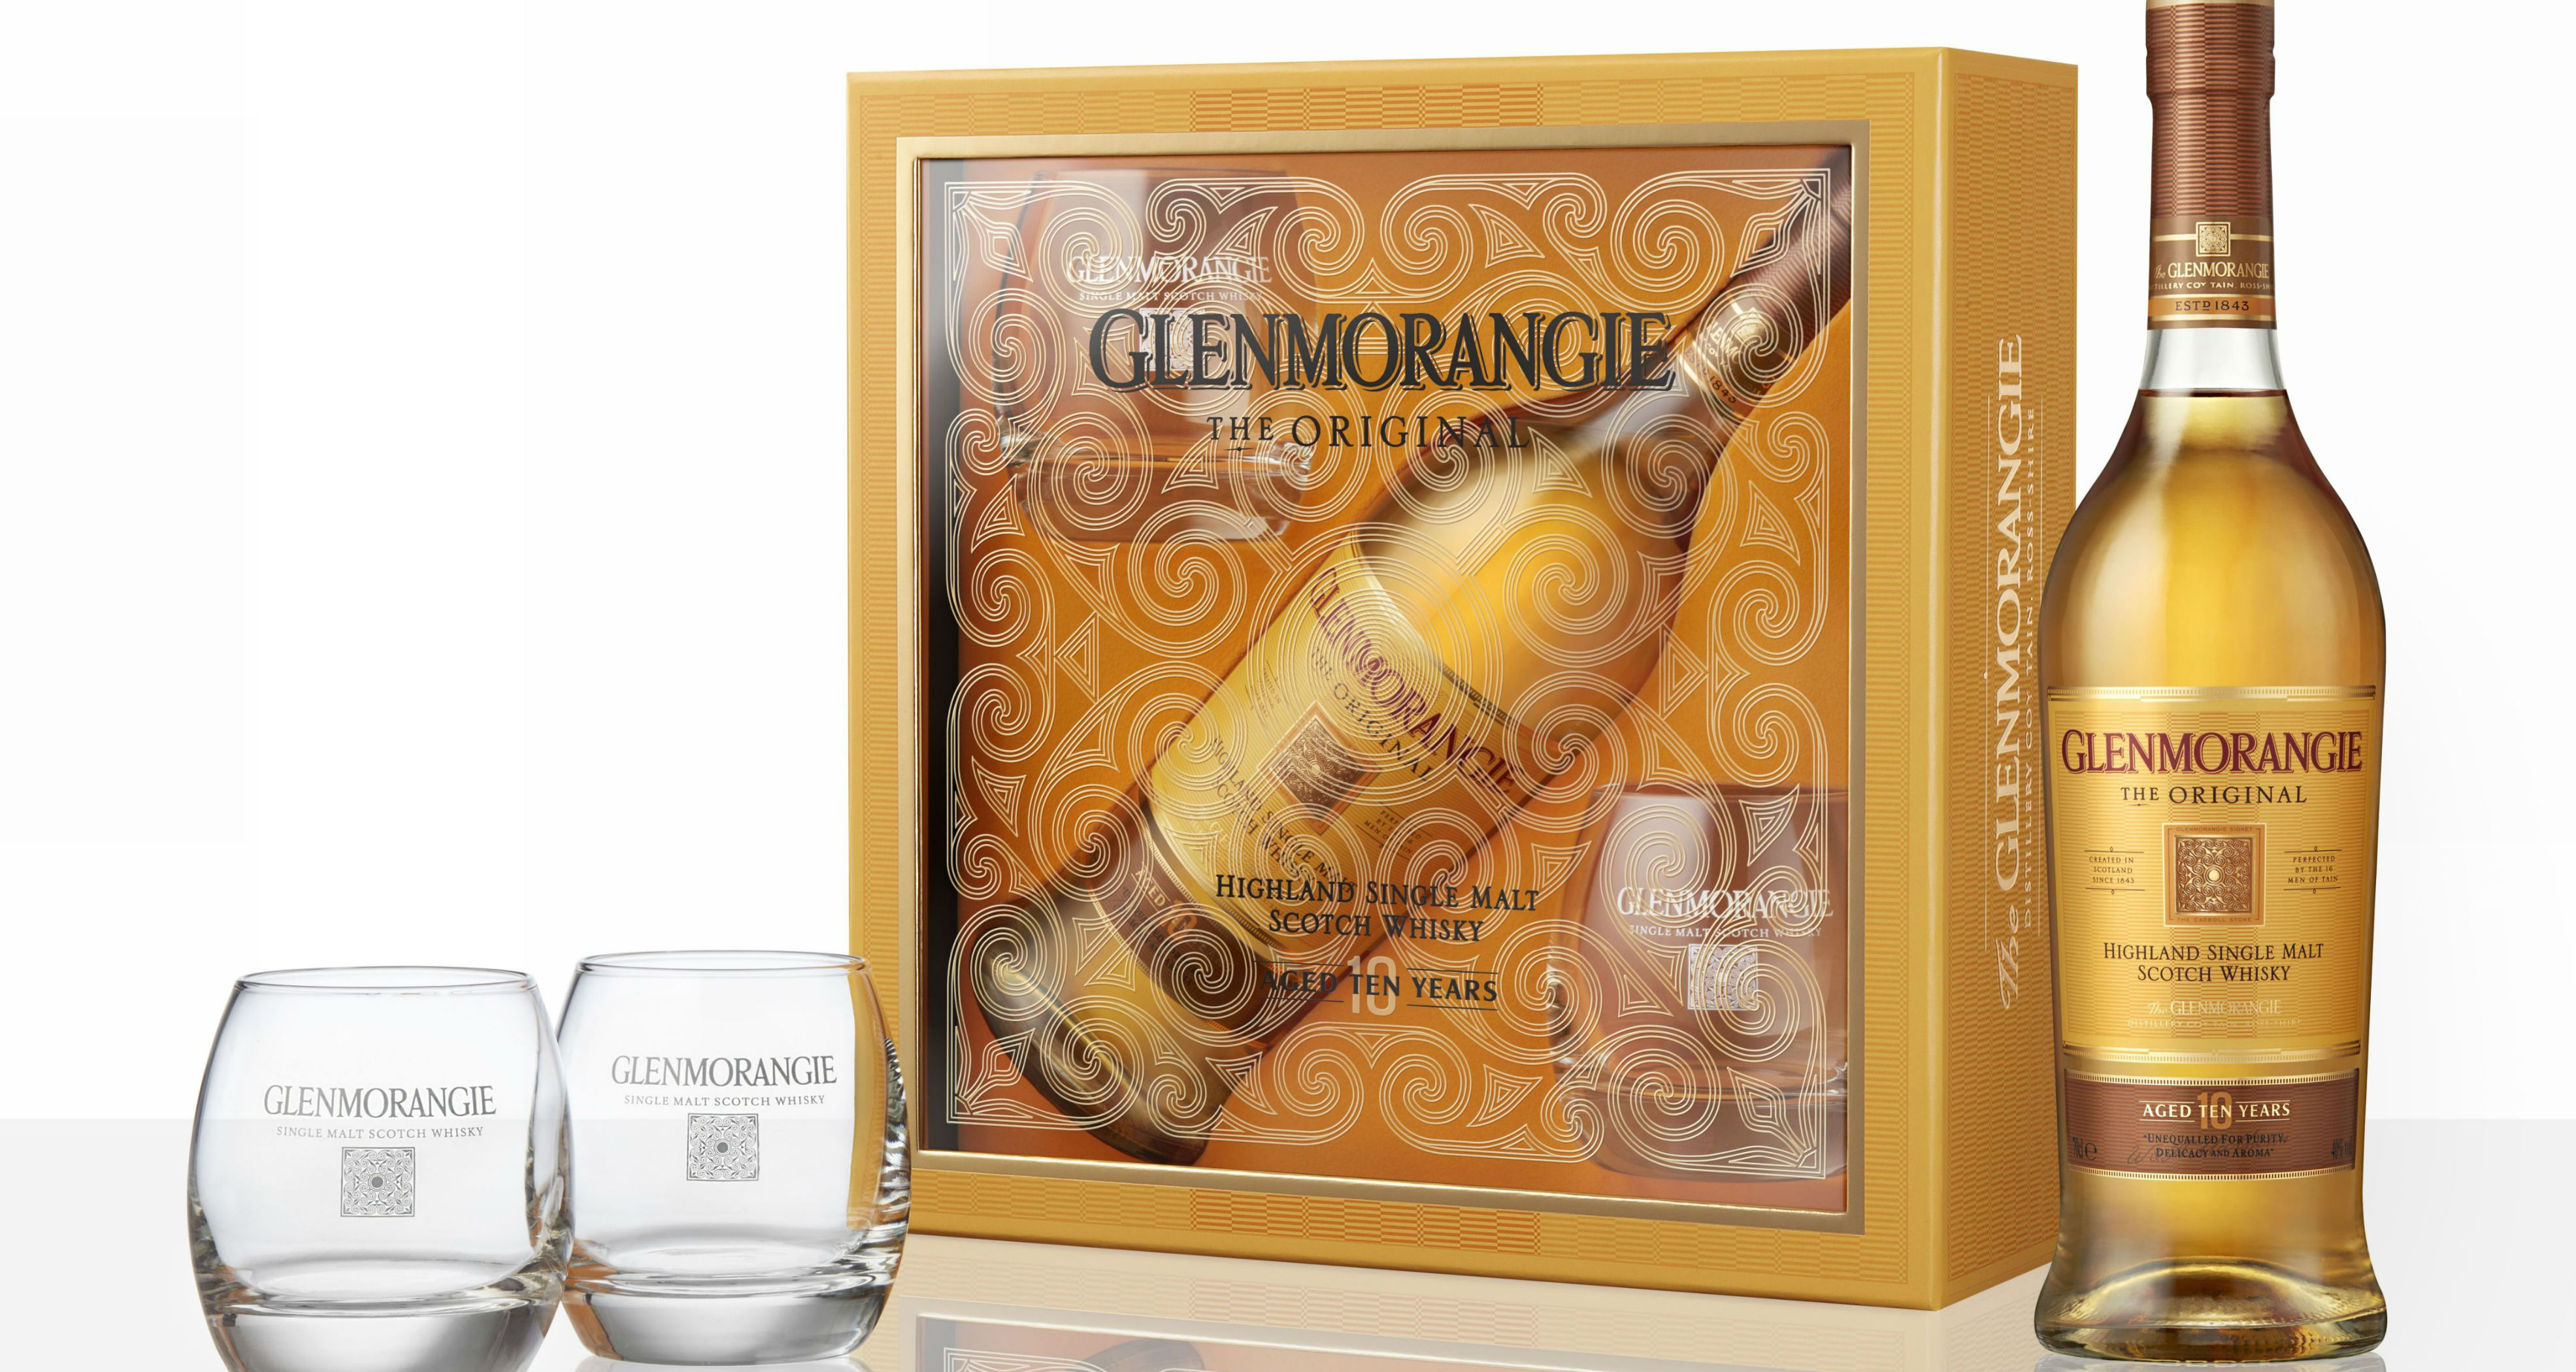 Glenmorangie Signet Whisky in Gift Box